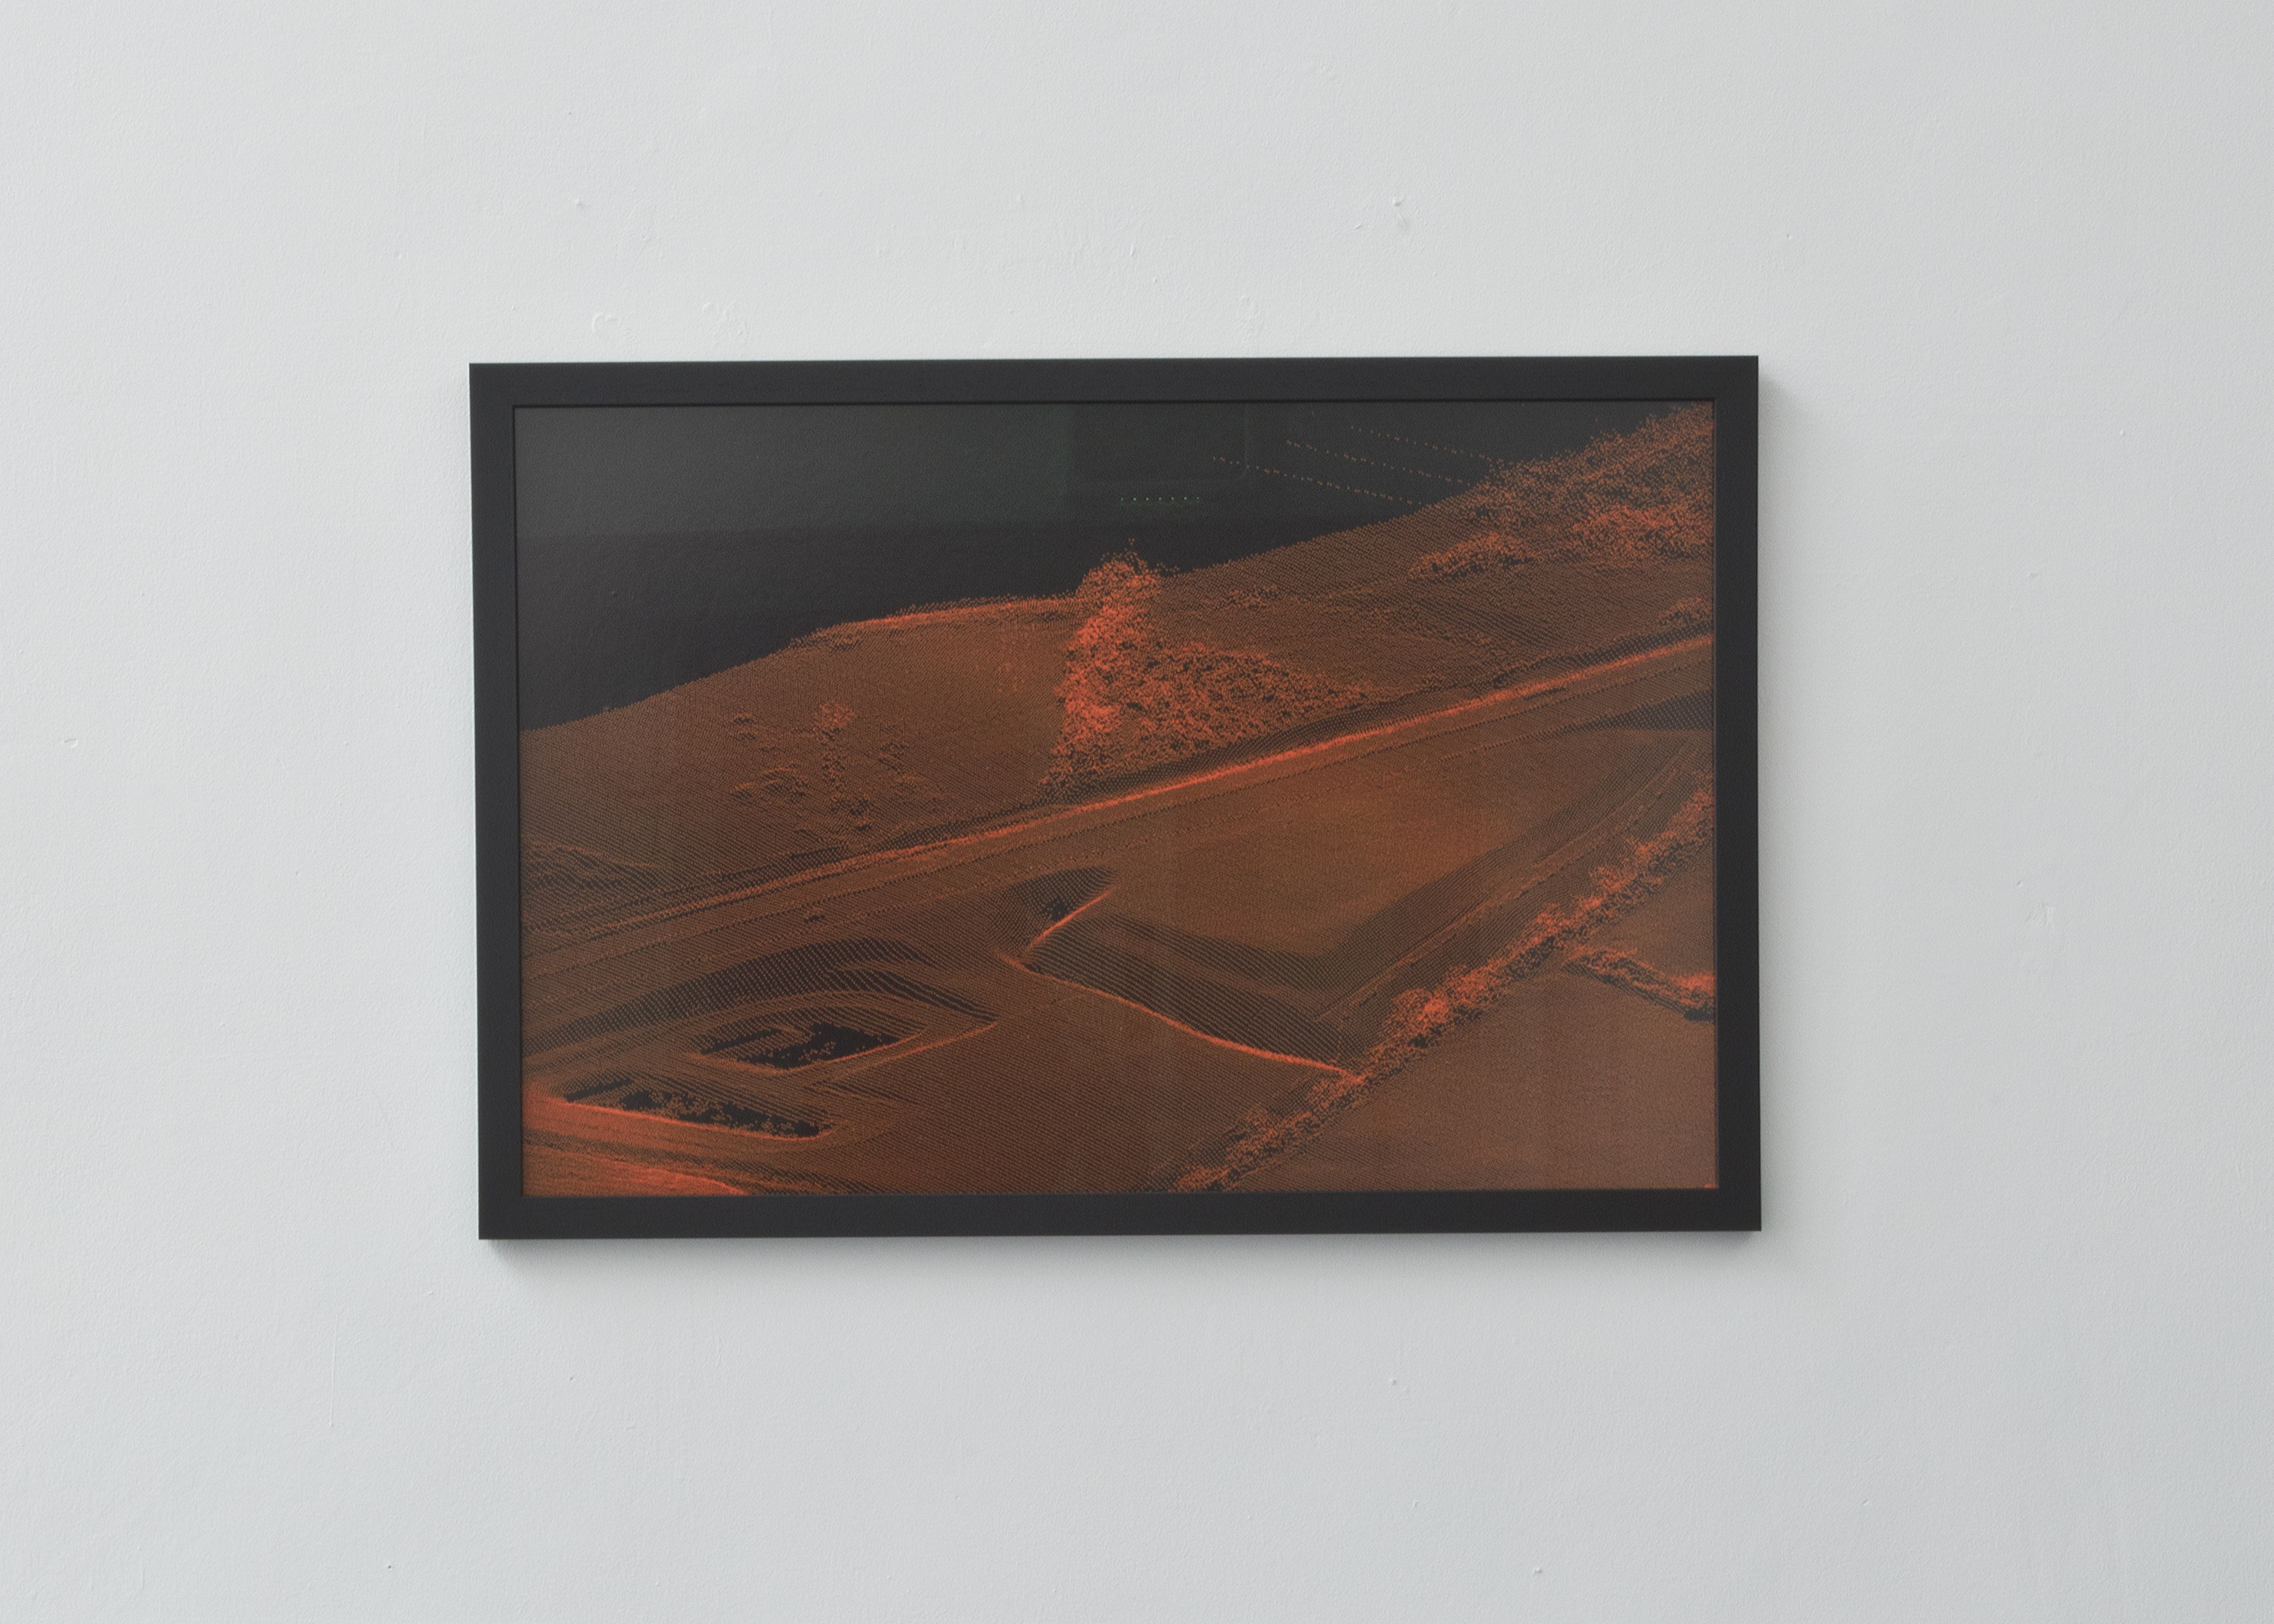 Martina O'Brien, Legacy Plots, 2021, Ultra-chrome prints, series of 3
Dimensions: 84cmx55cm